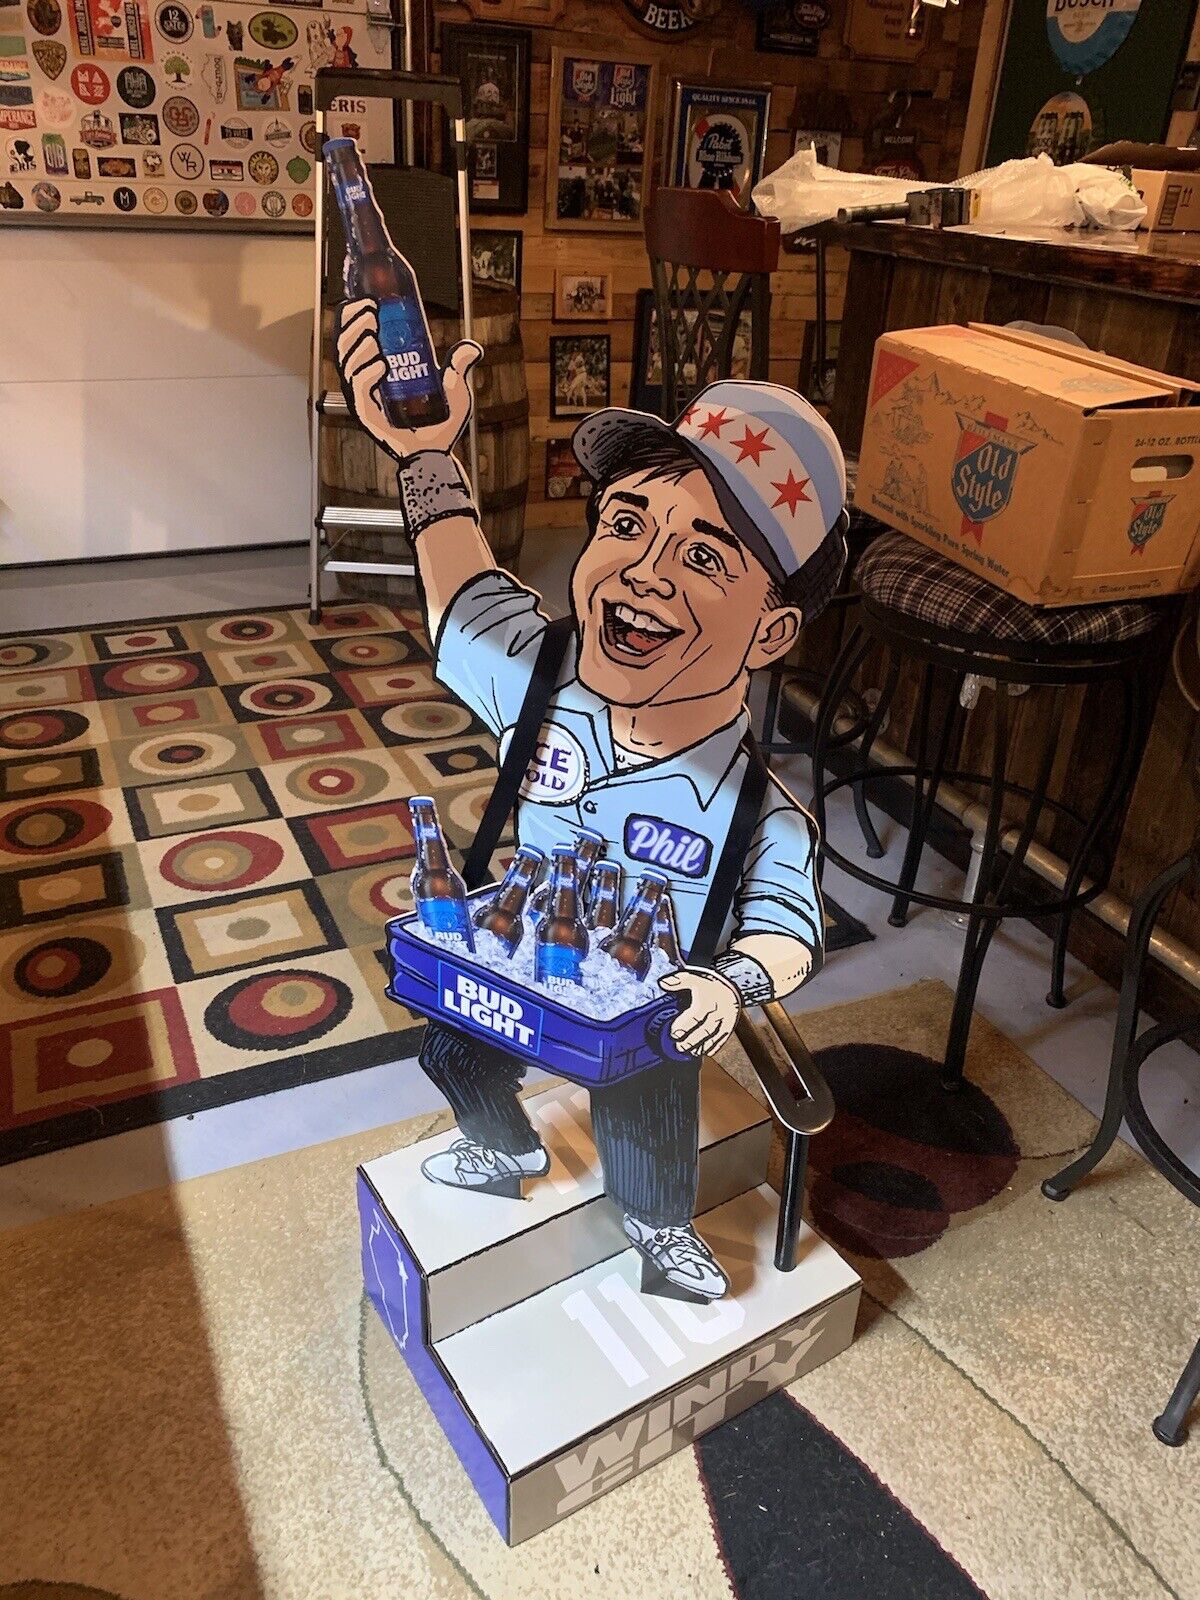 4 Foot Tall Bud Light Beerman Phil Windy City Chicago, IL Cardboard 3D Standup